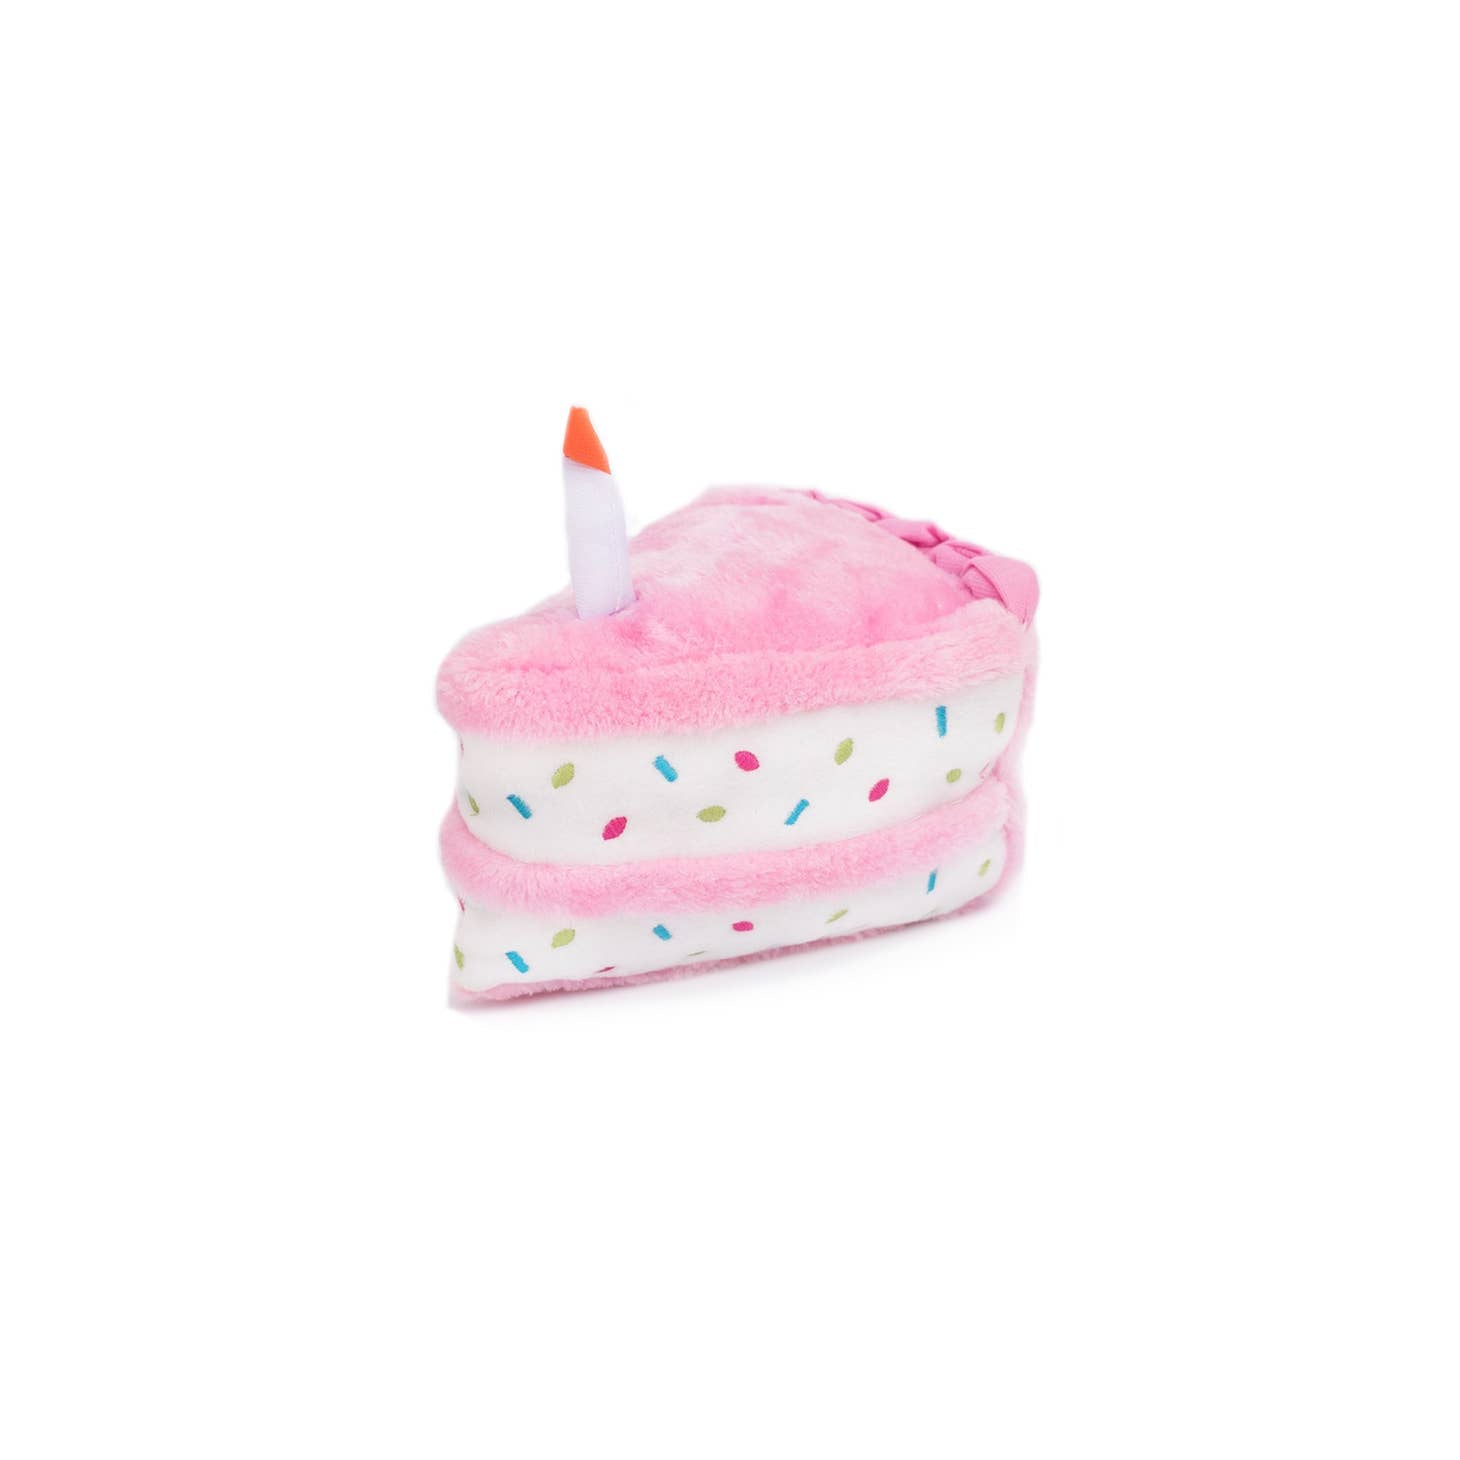 Birthday Cake - Pink - Plush Dog Toy